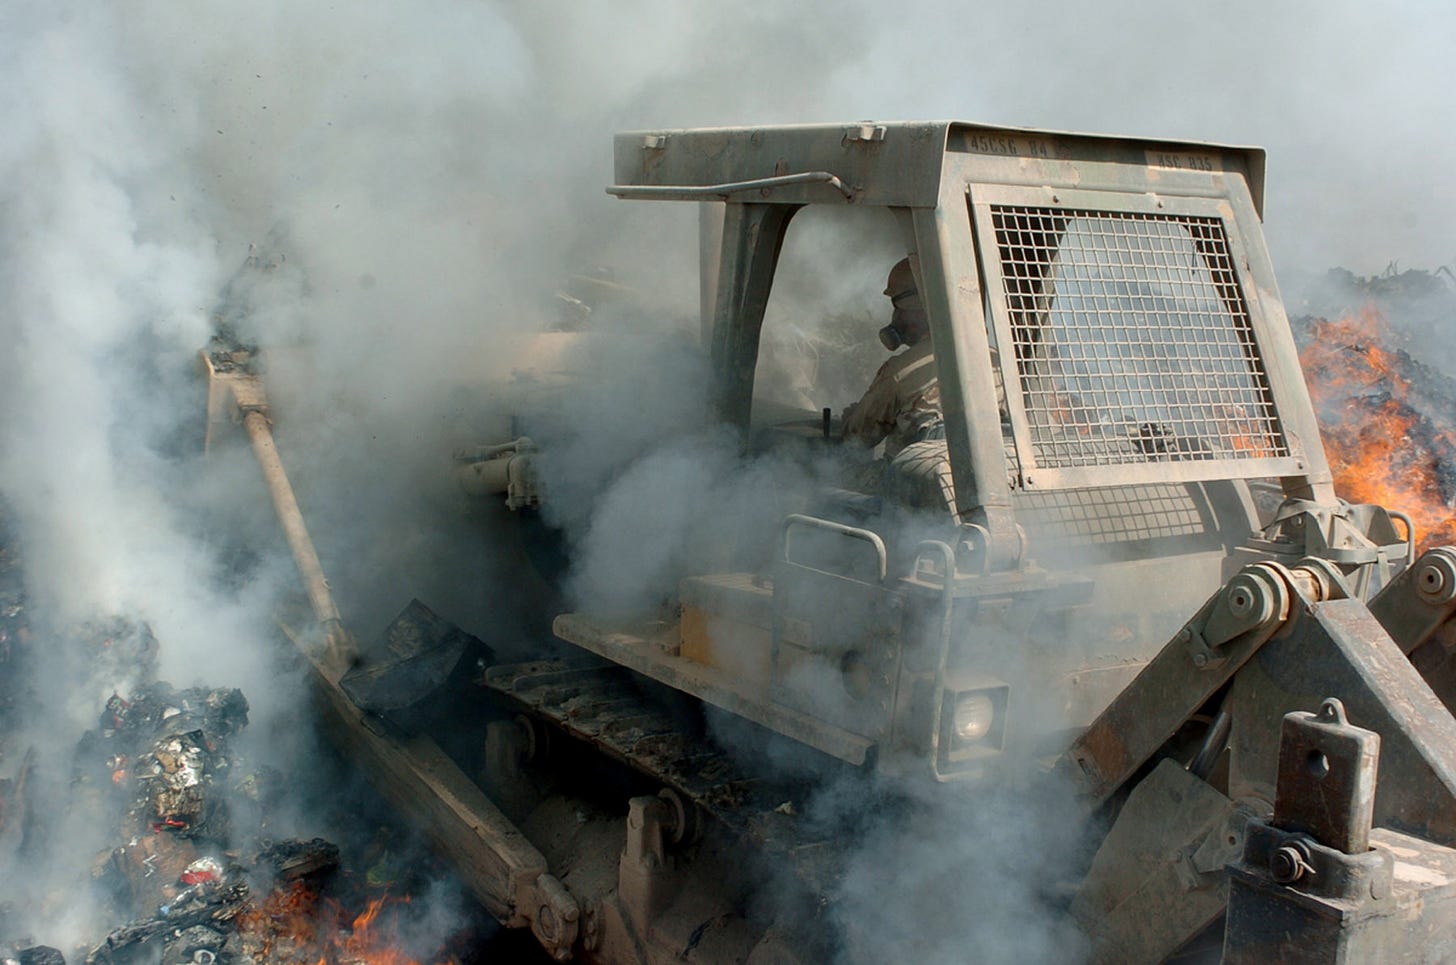 Soldier operates bulldozer in Iraq burn pit, enveloped in smoke.